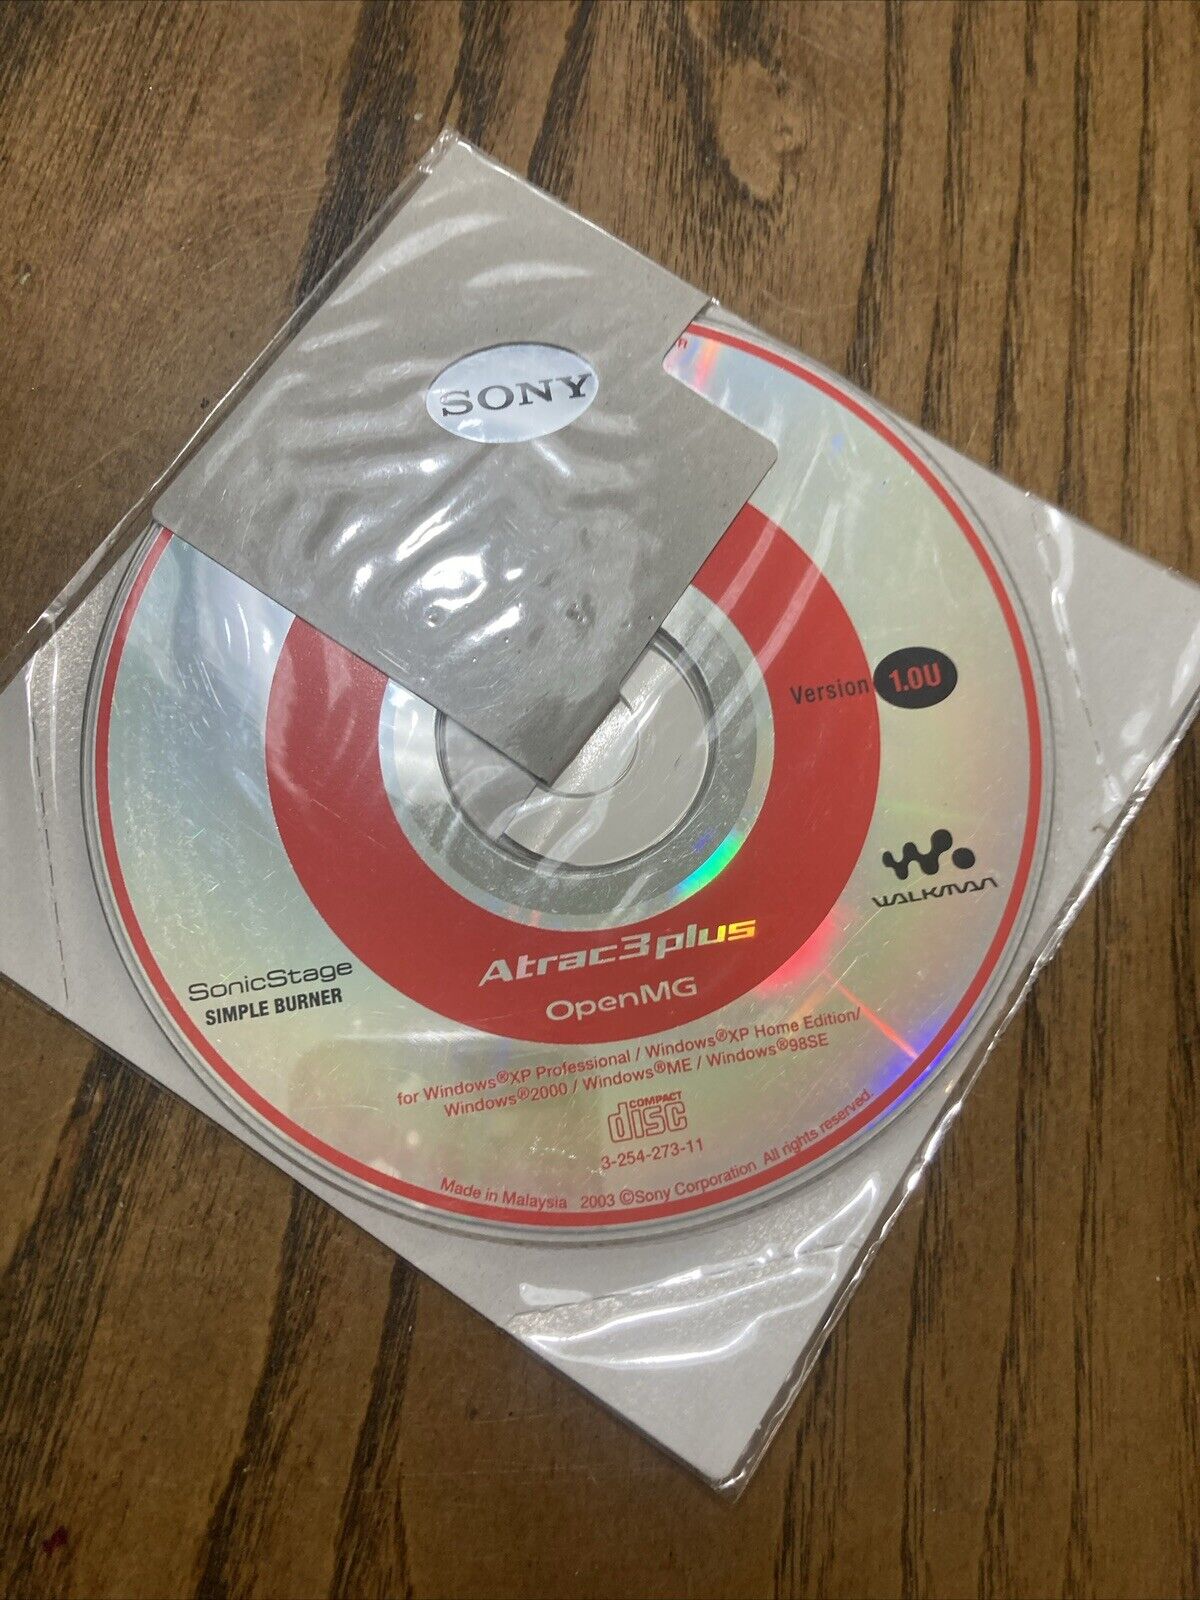 Vintage SONY Walkman Version 1.0U Atrac3plus OpenMG Windows XP CD ROM